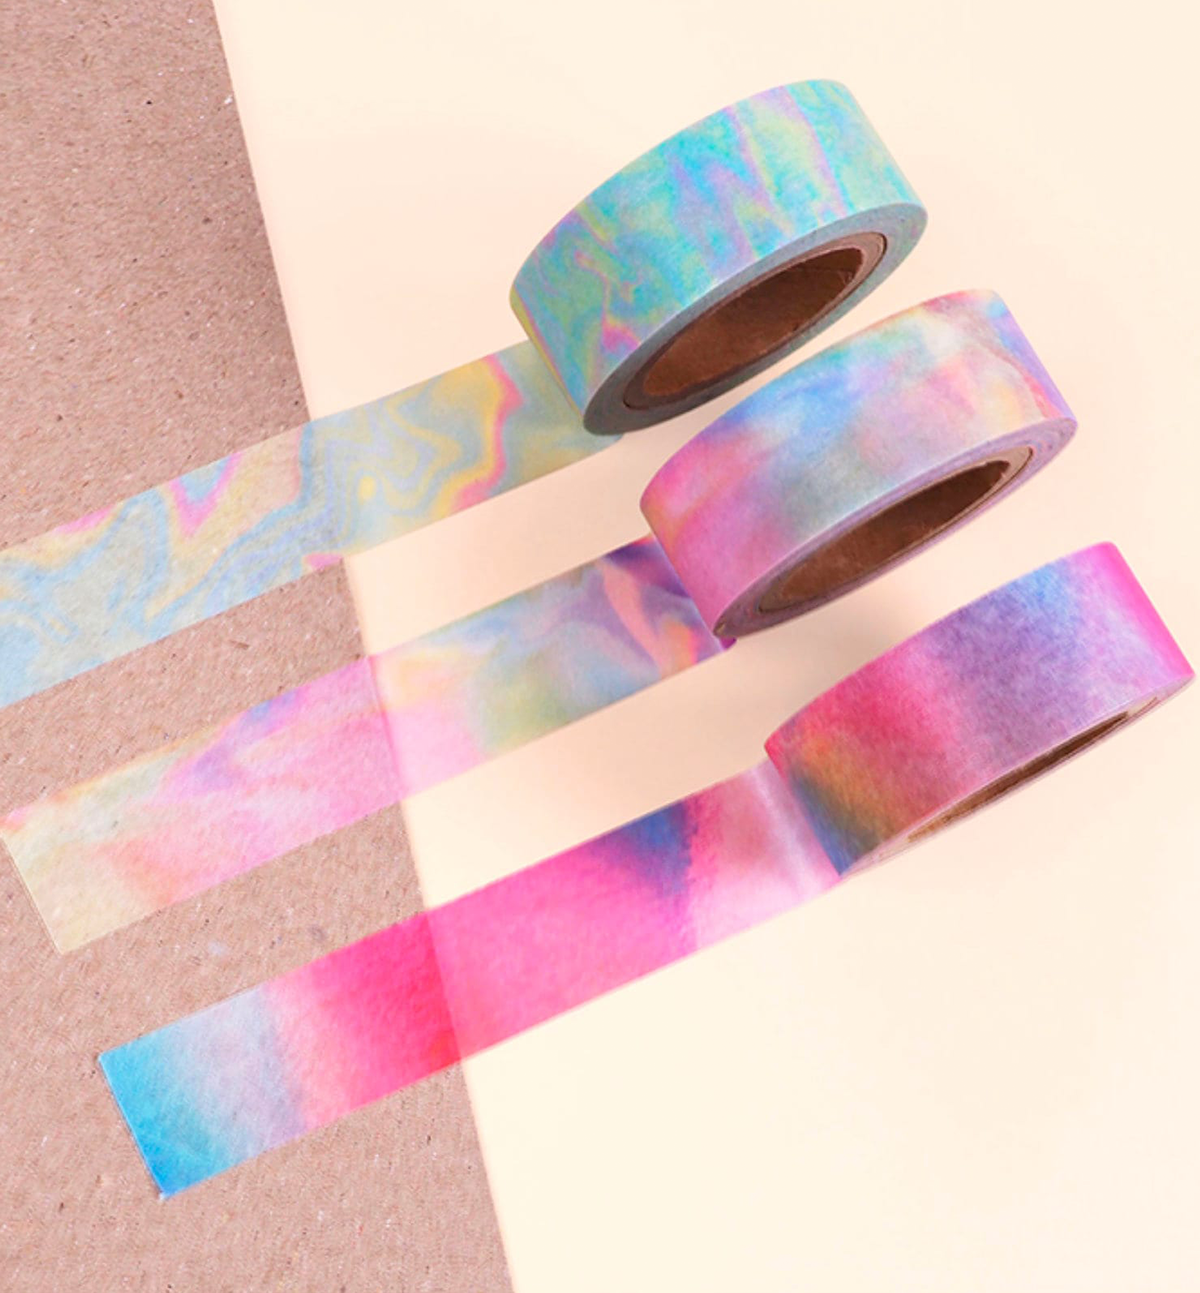 Hologram Washi Tape [Matte]